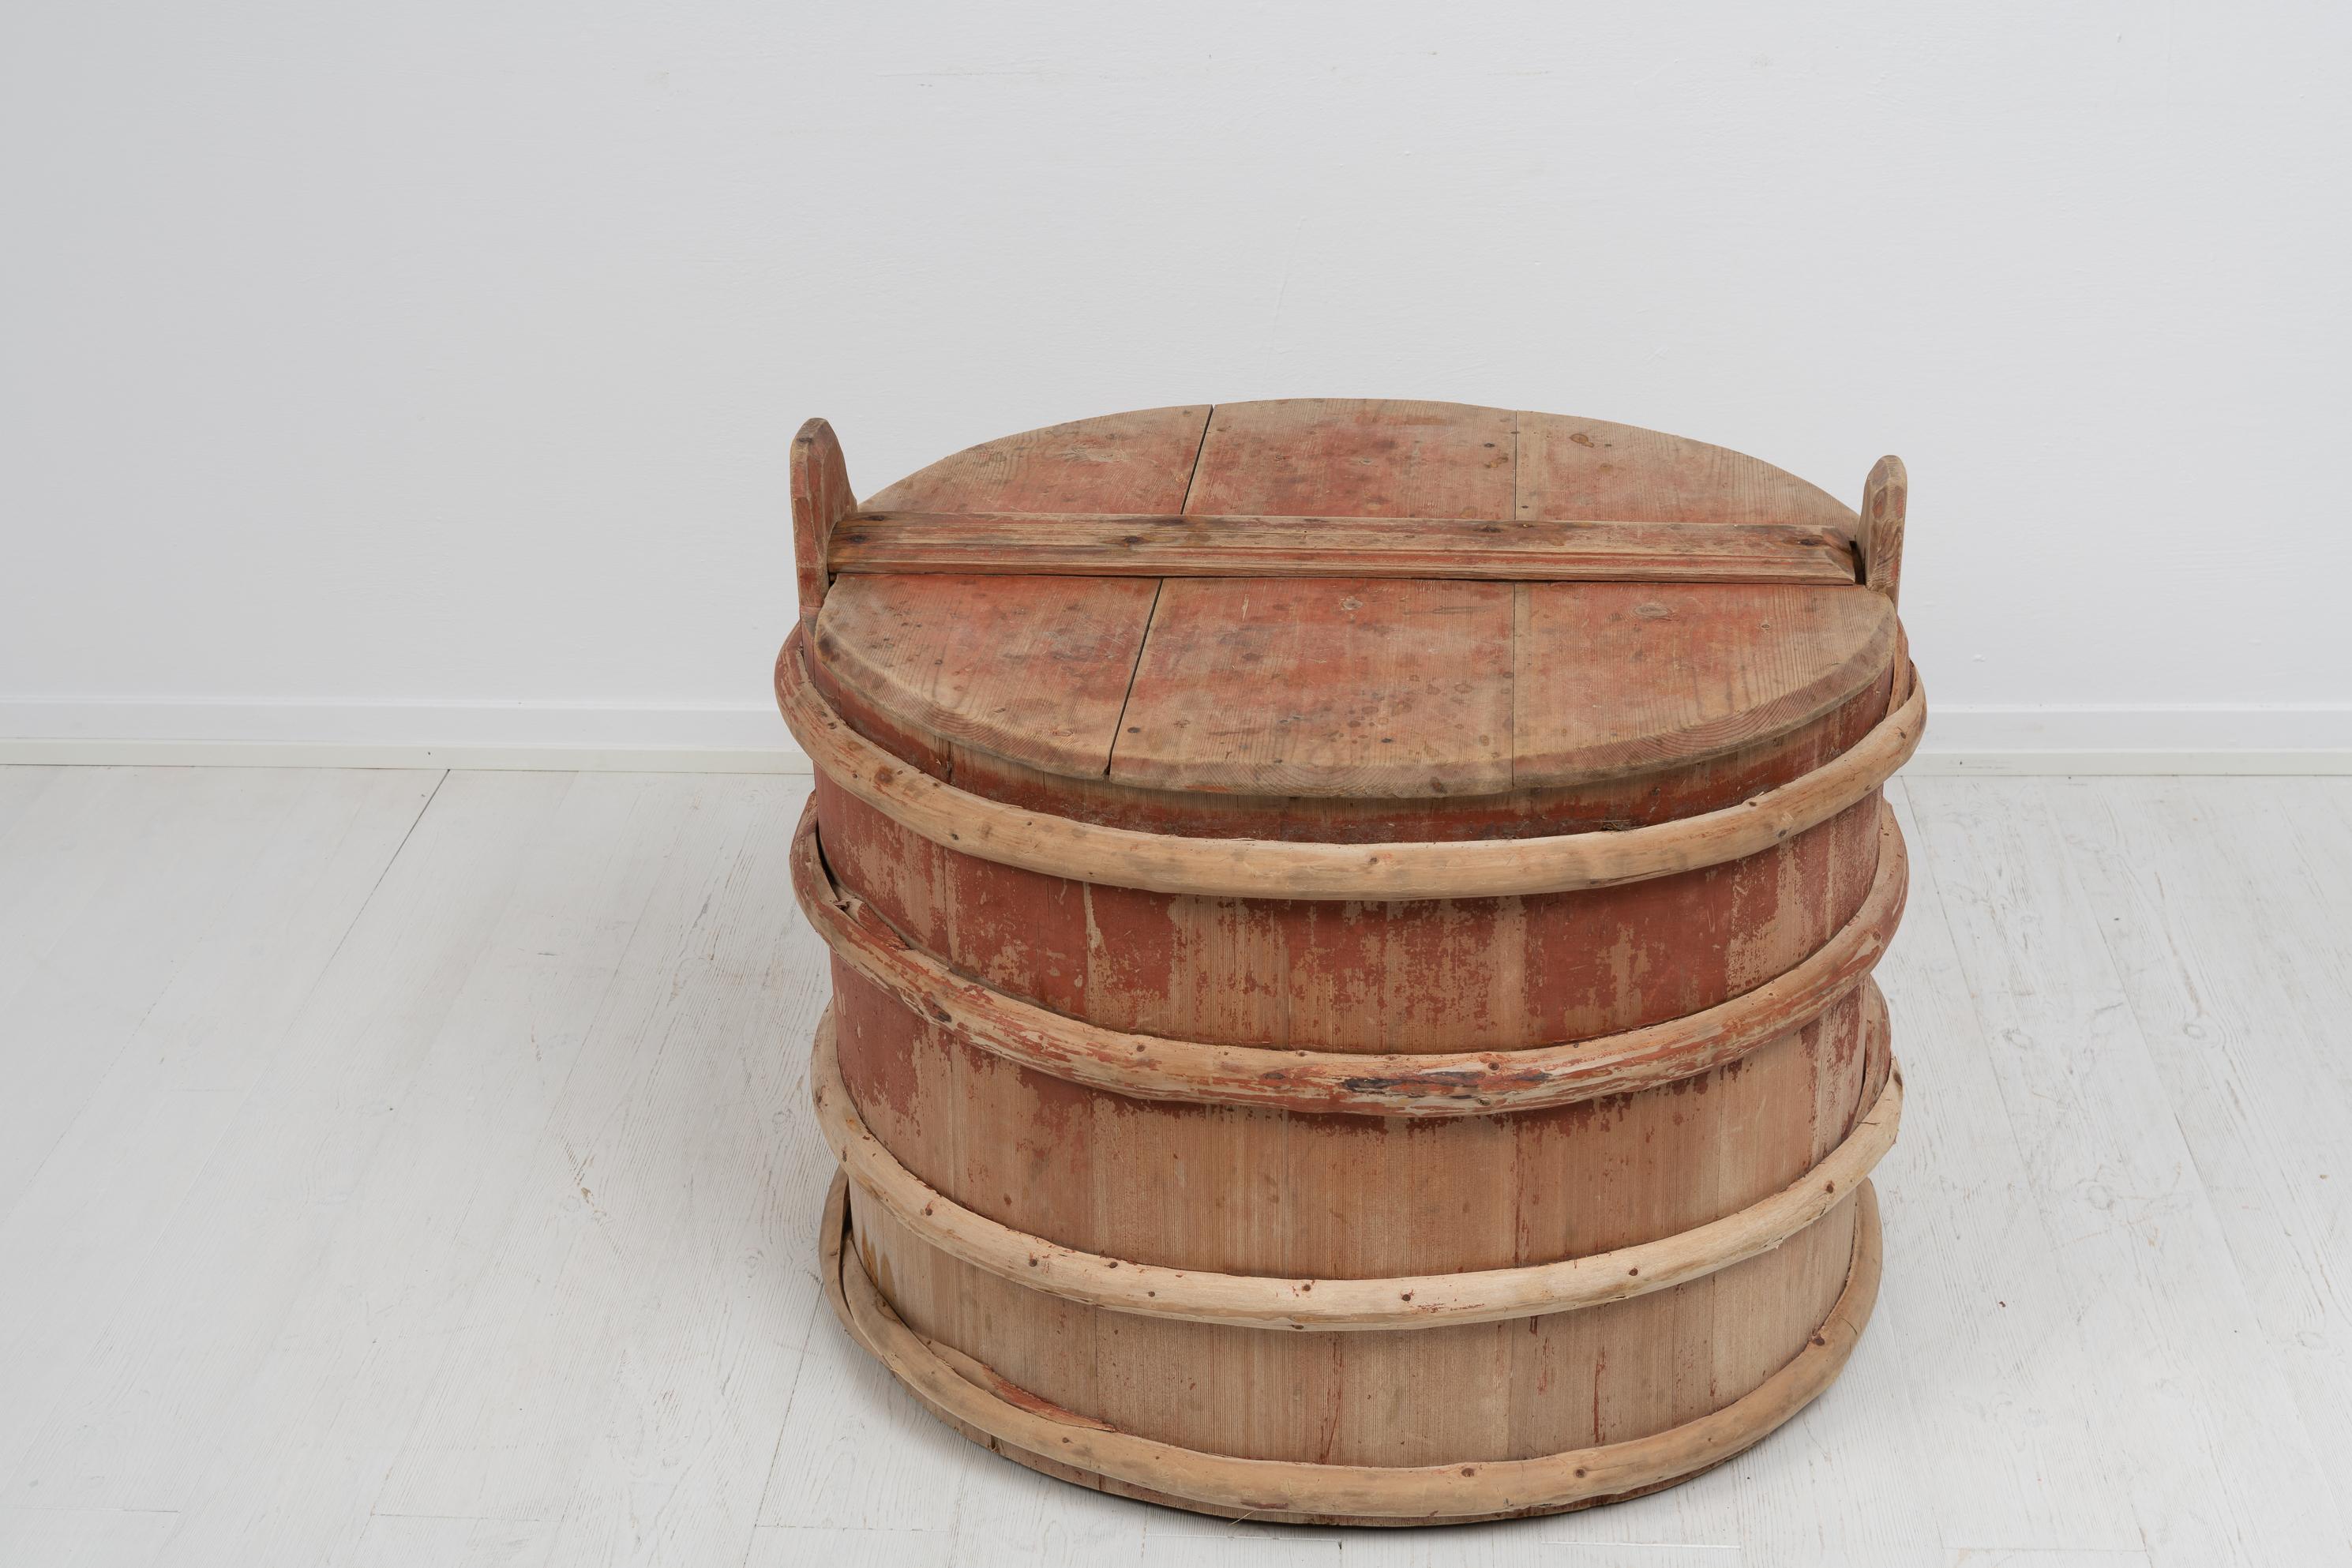 Hand-Crafted 19th Century Swedish Folk Art Wooden Barrel